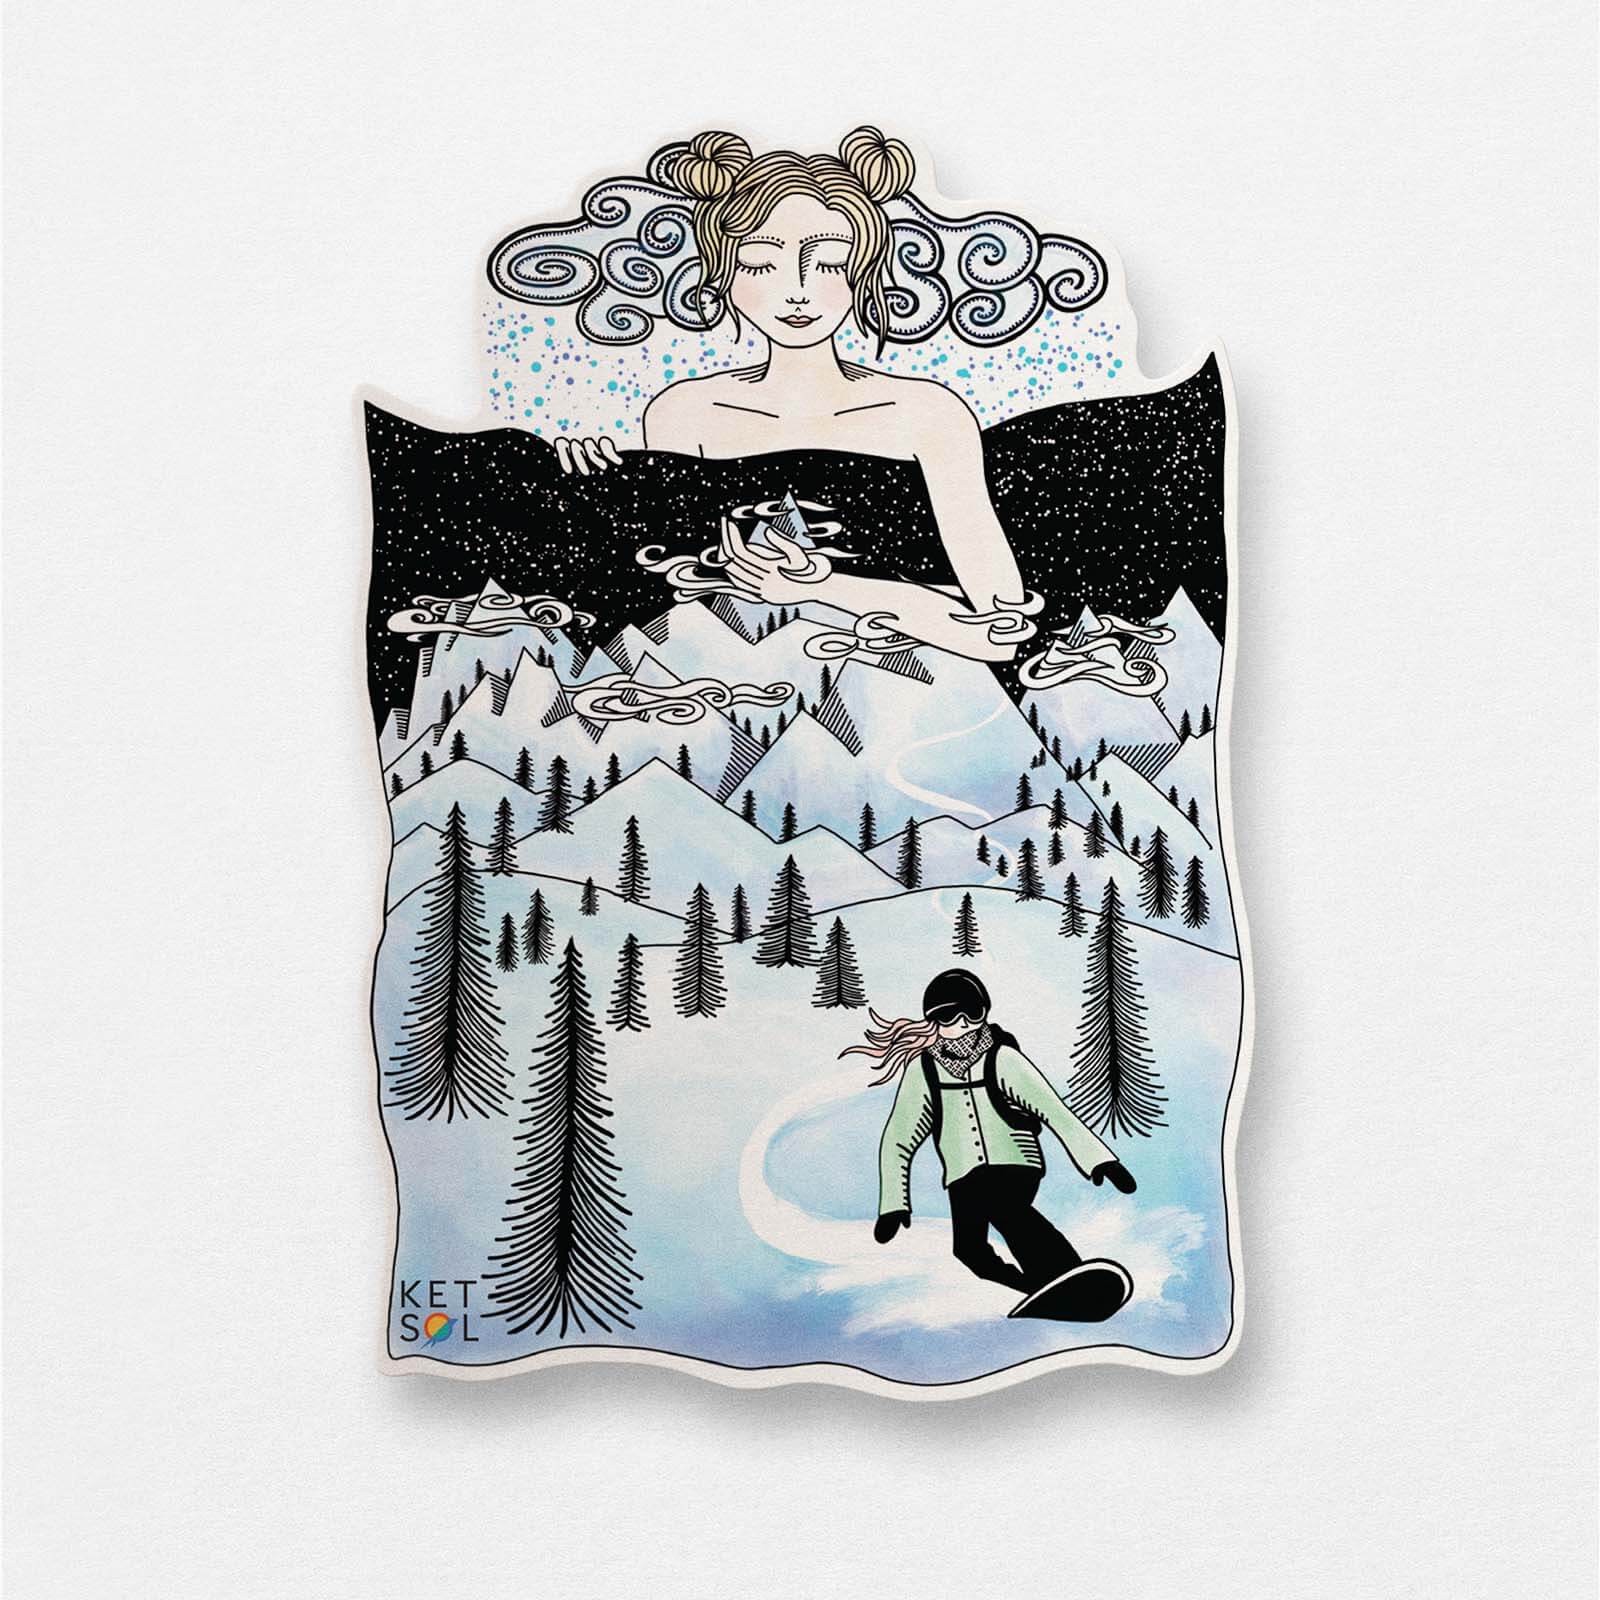 Snowboard Dreams Sticker - Ketsol